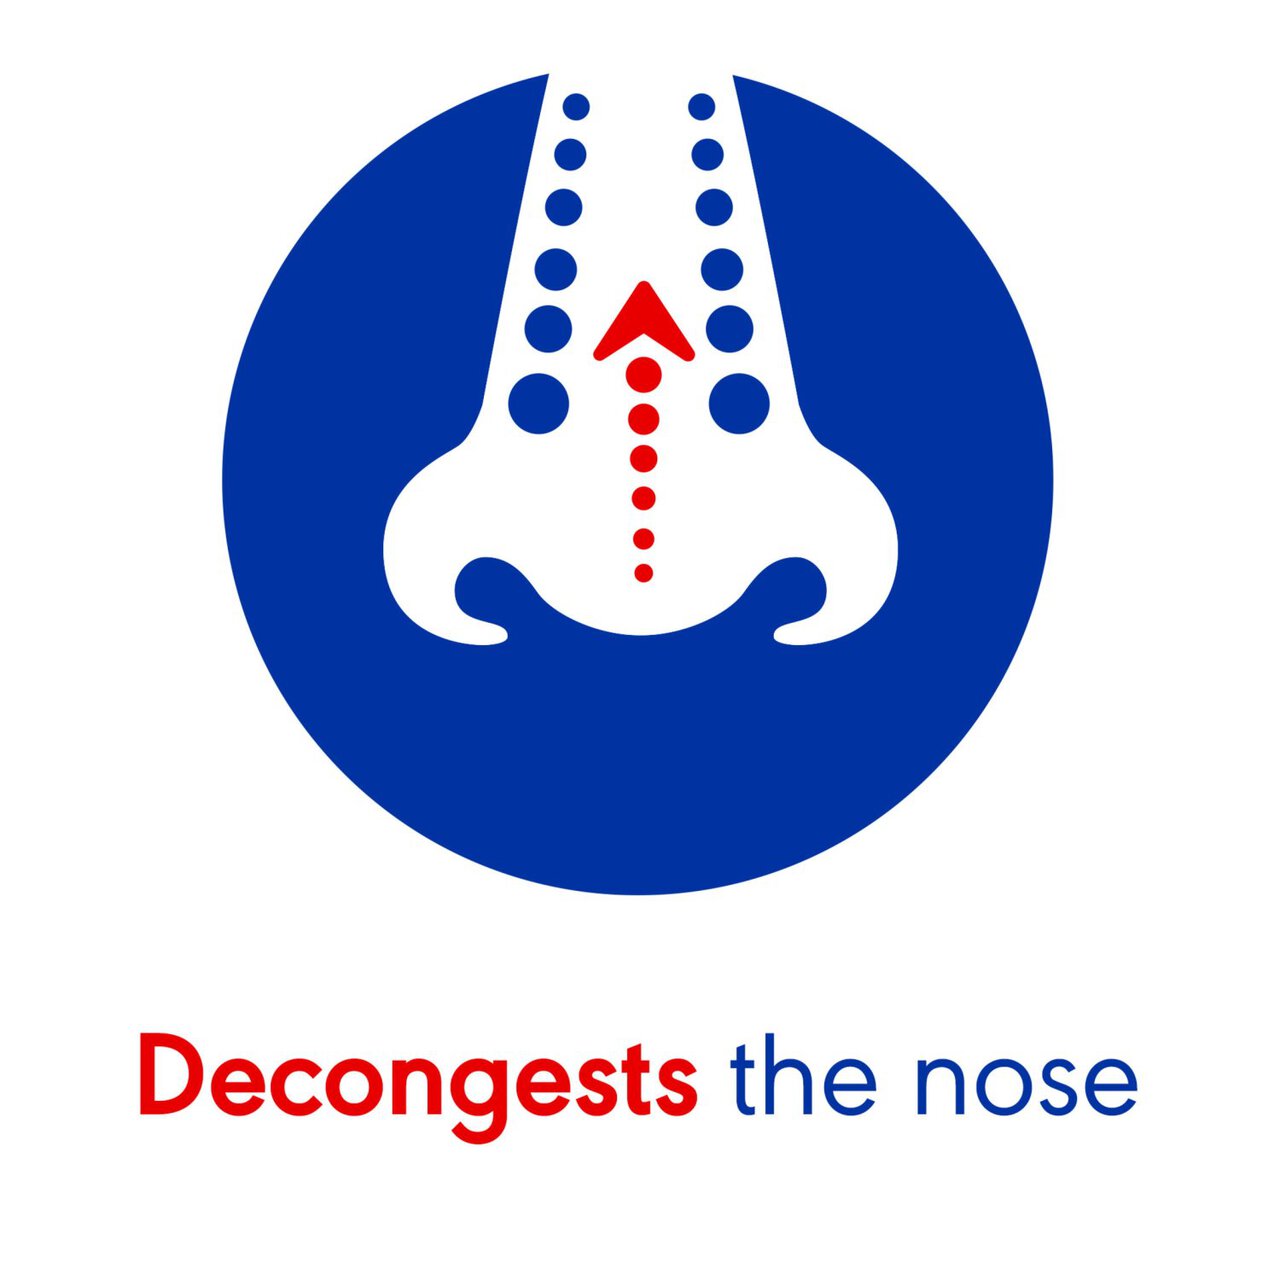 Otrivine Sinusitis Relief & Decongestant Nasal Spray 10ml 10ml